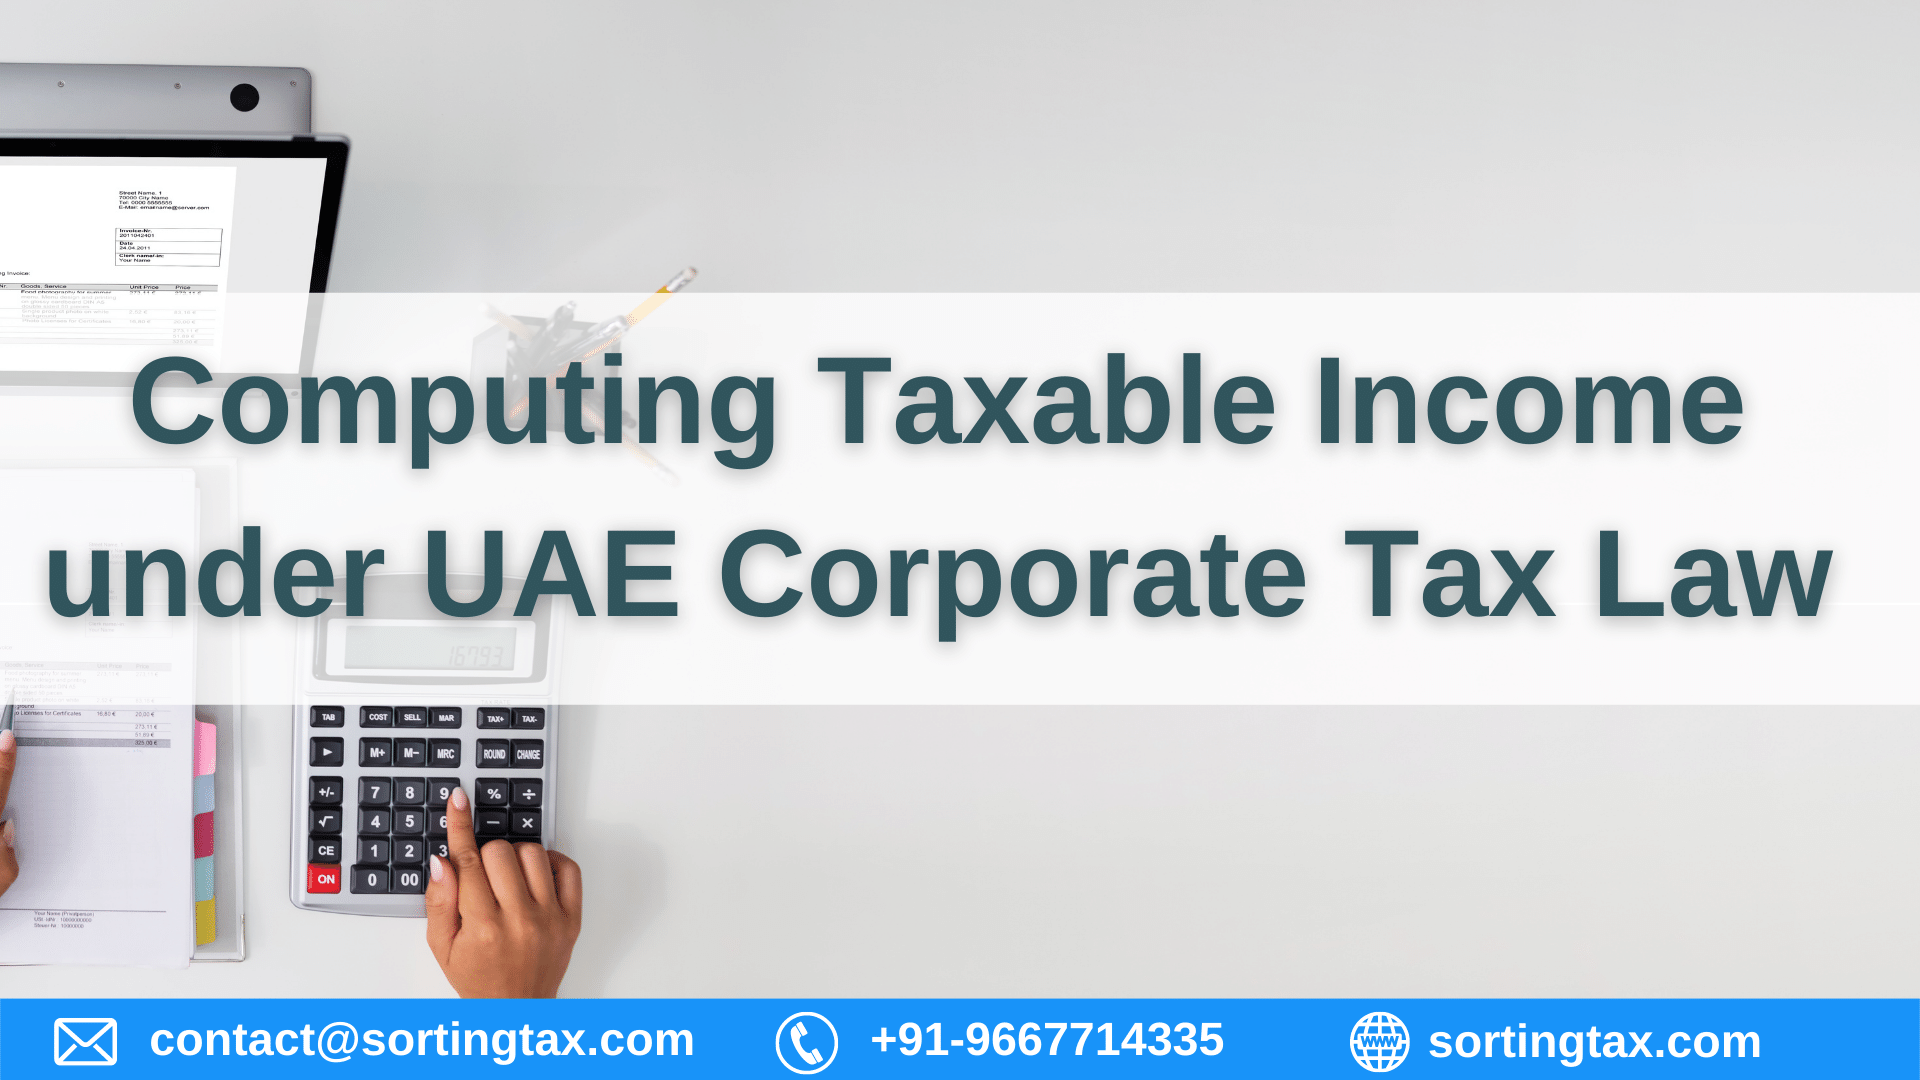 Computing Taxable Income under UAE Corporate Tax Law